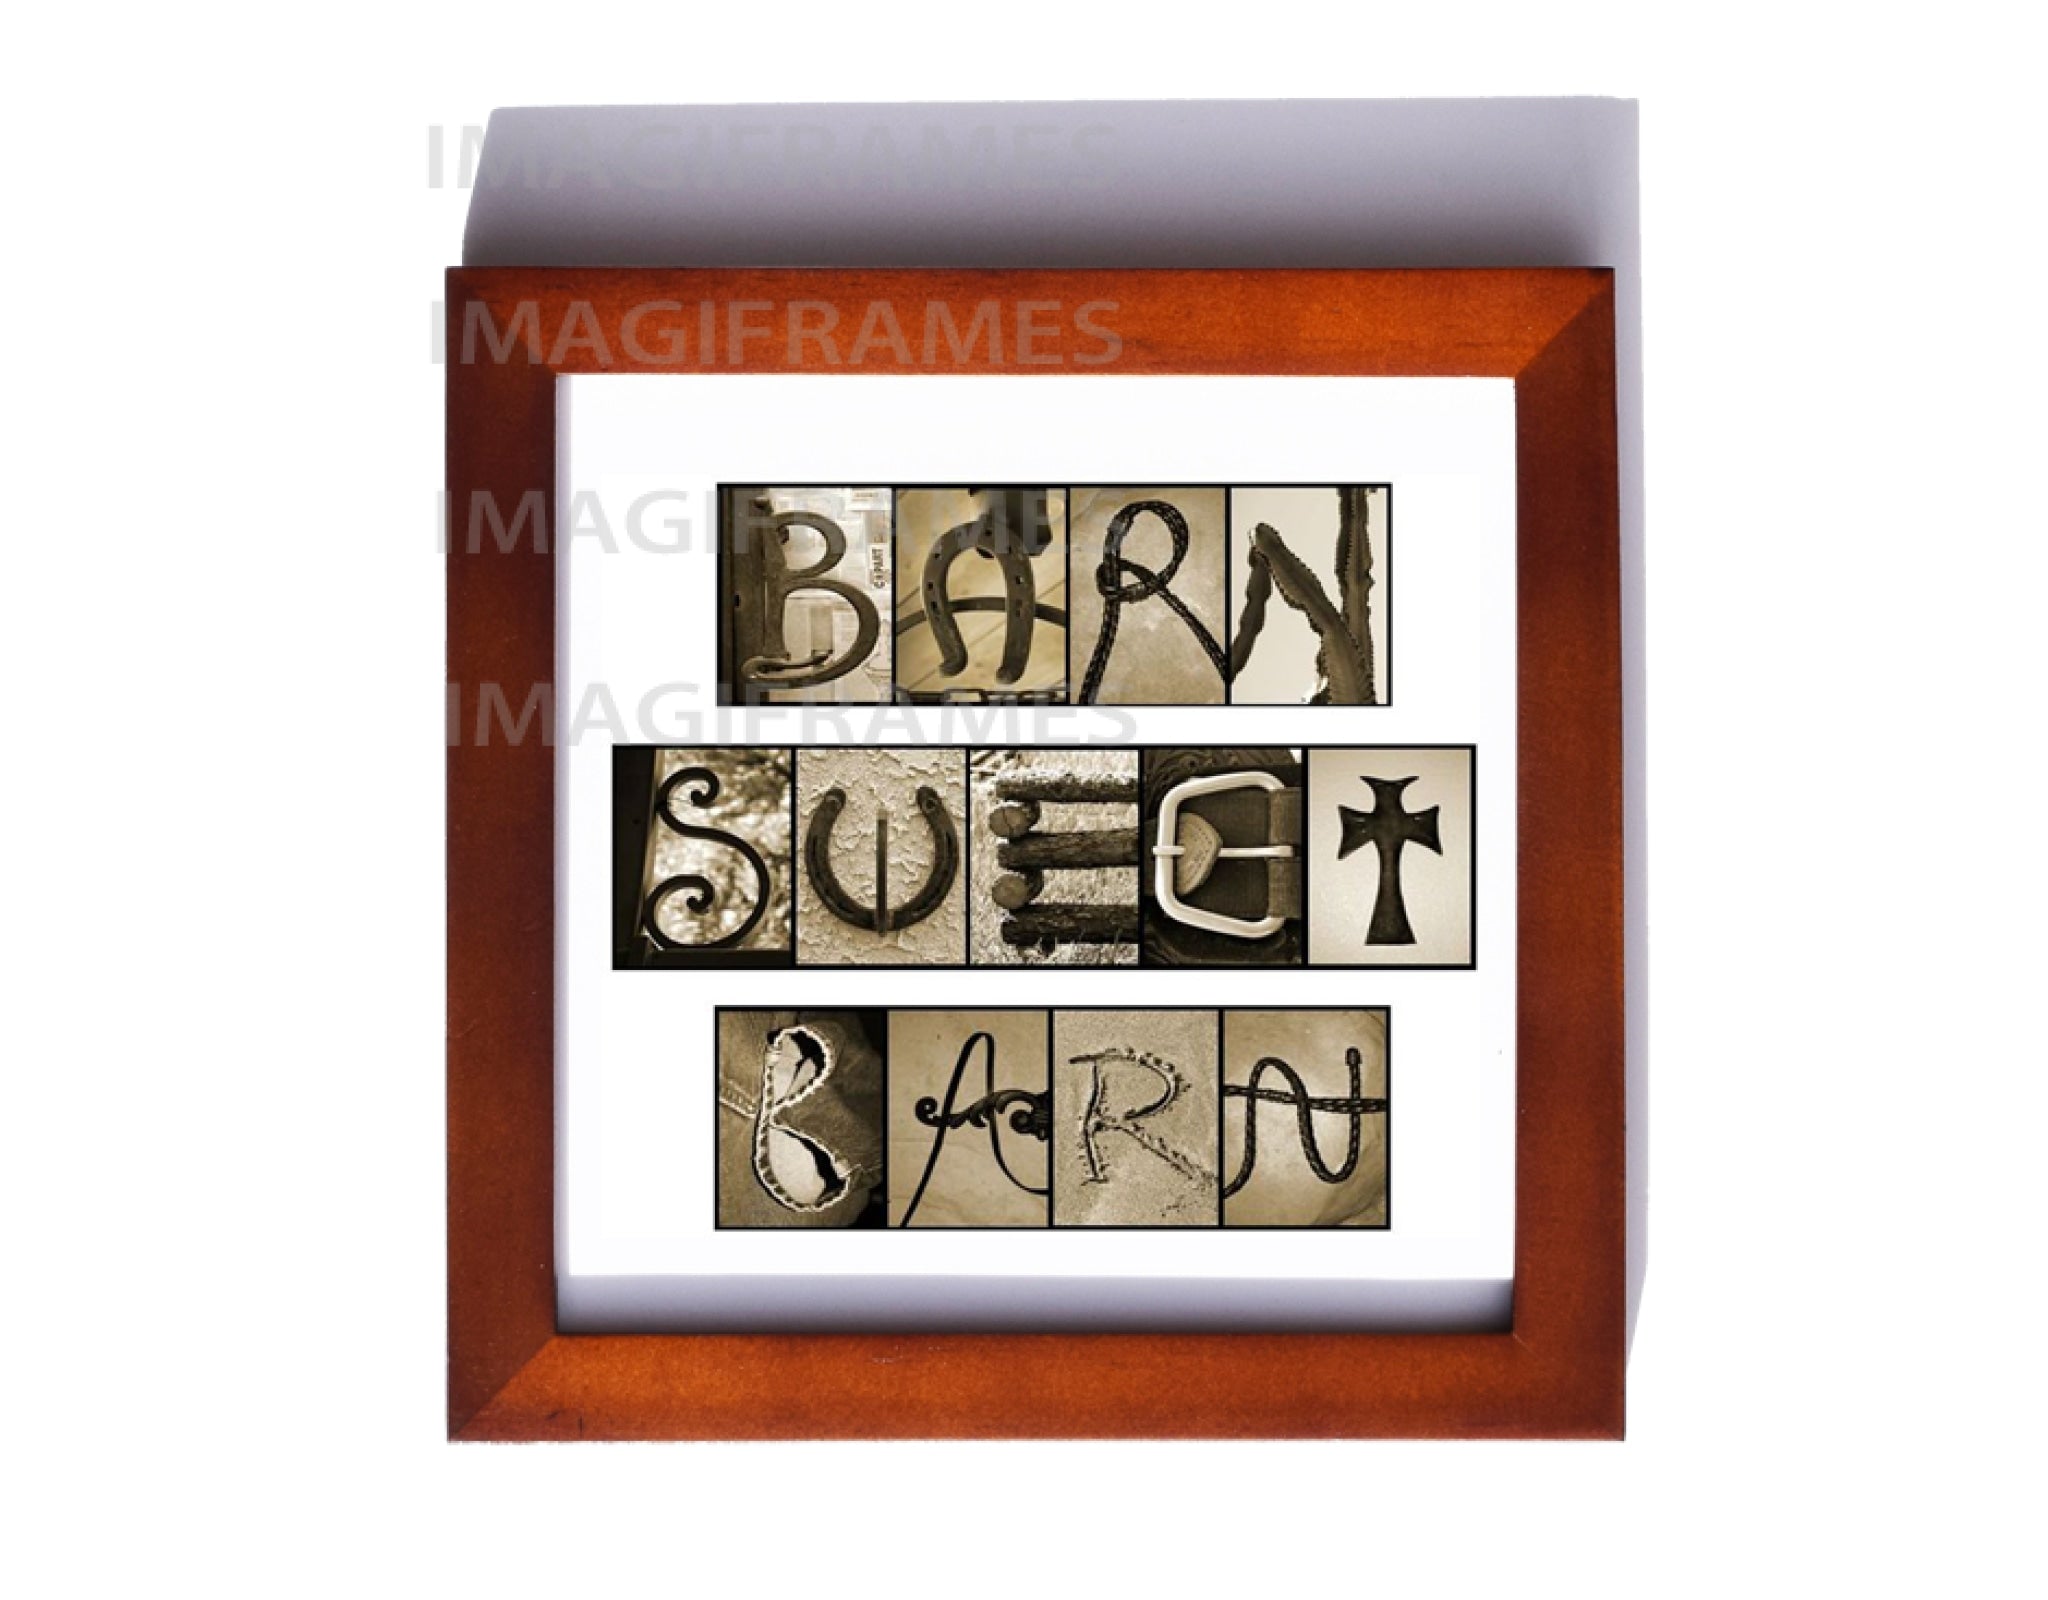 Barn Sweet Brown Frame (5X5)